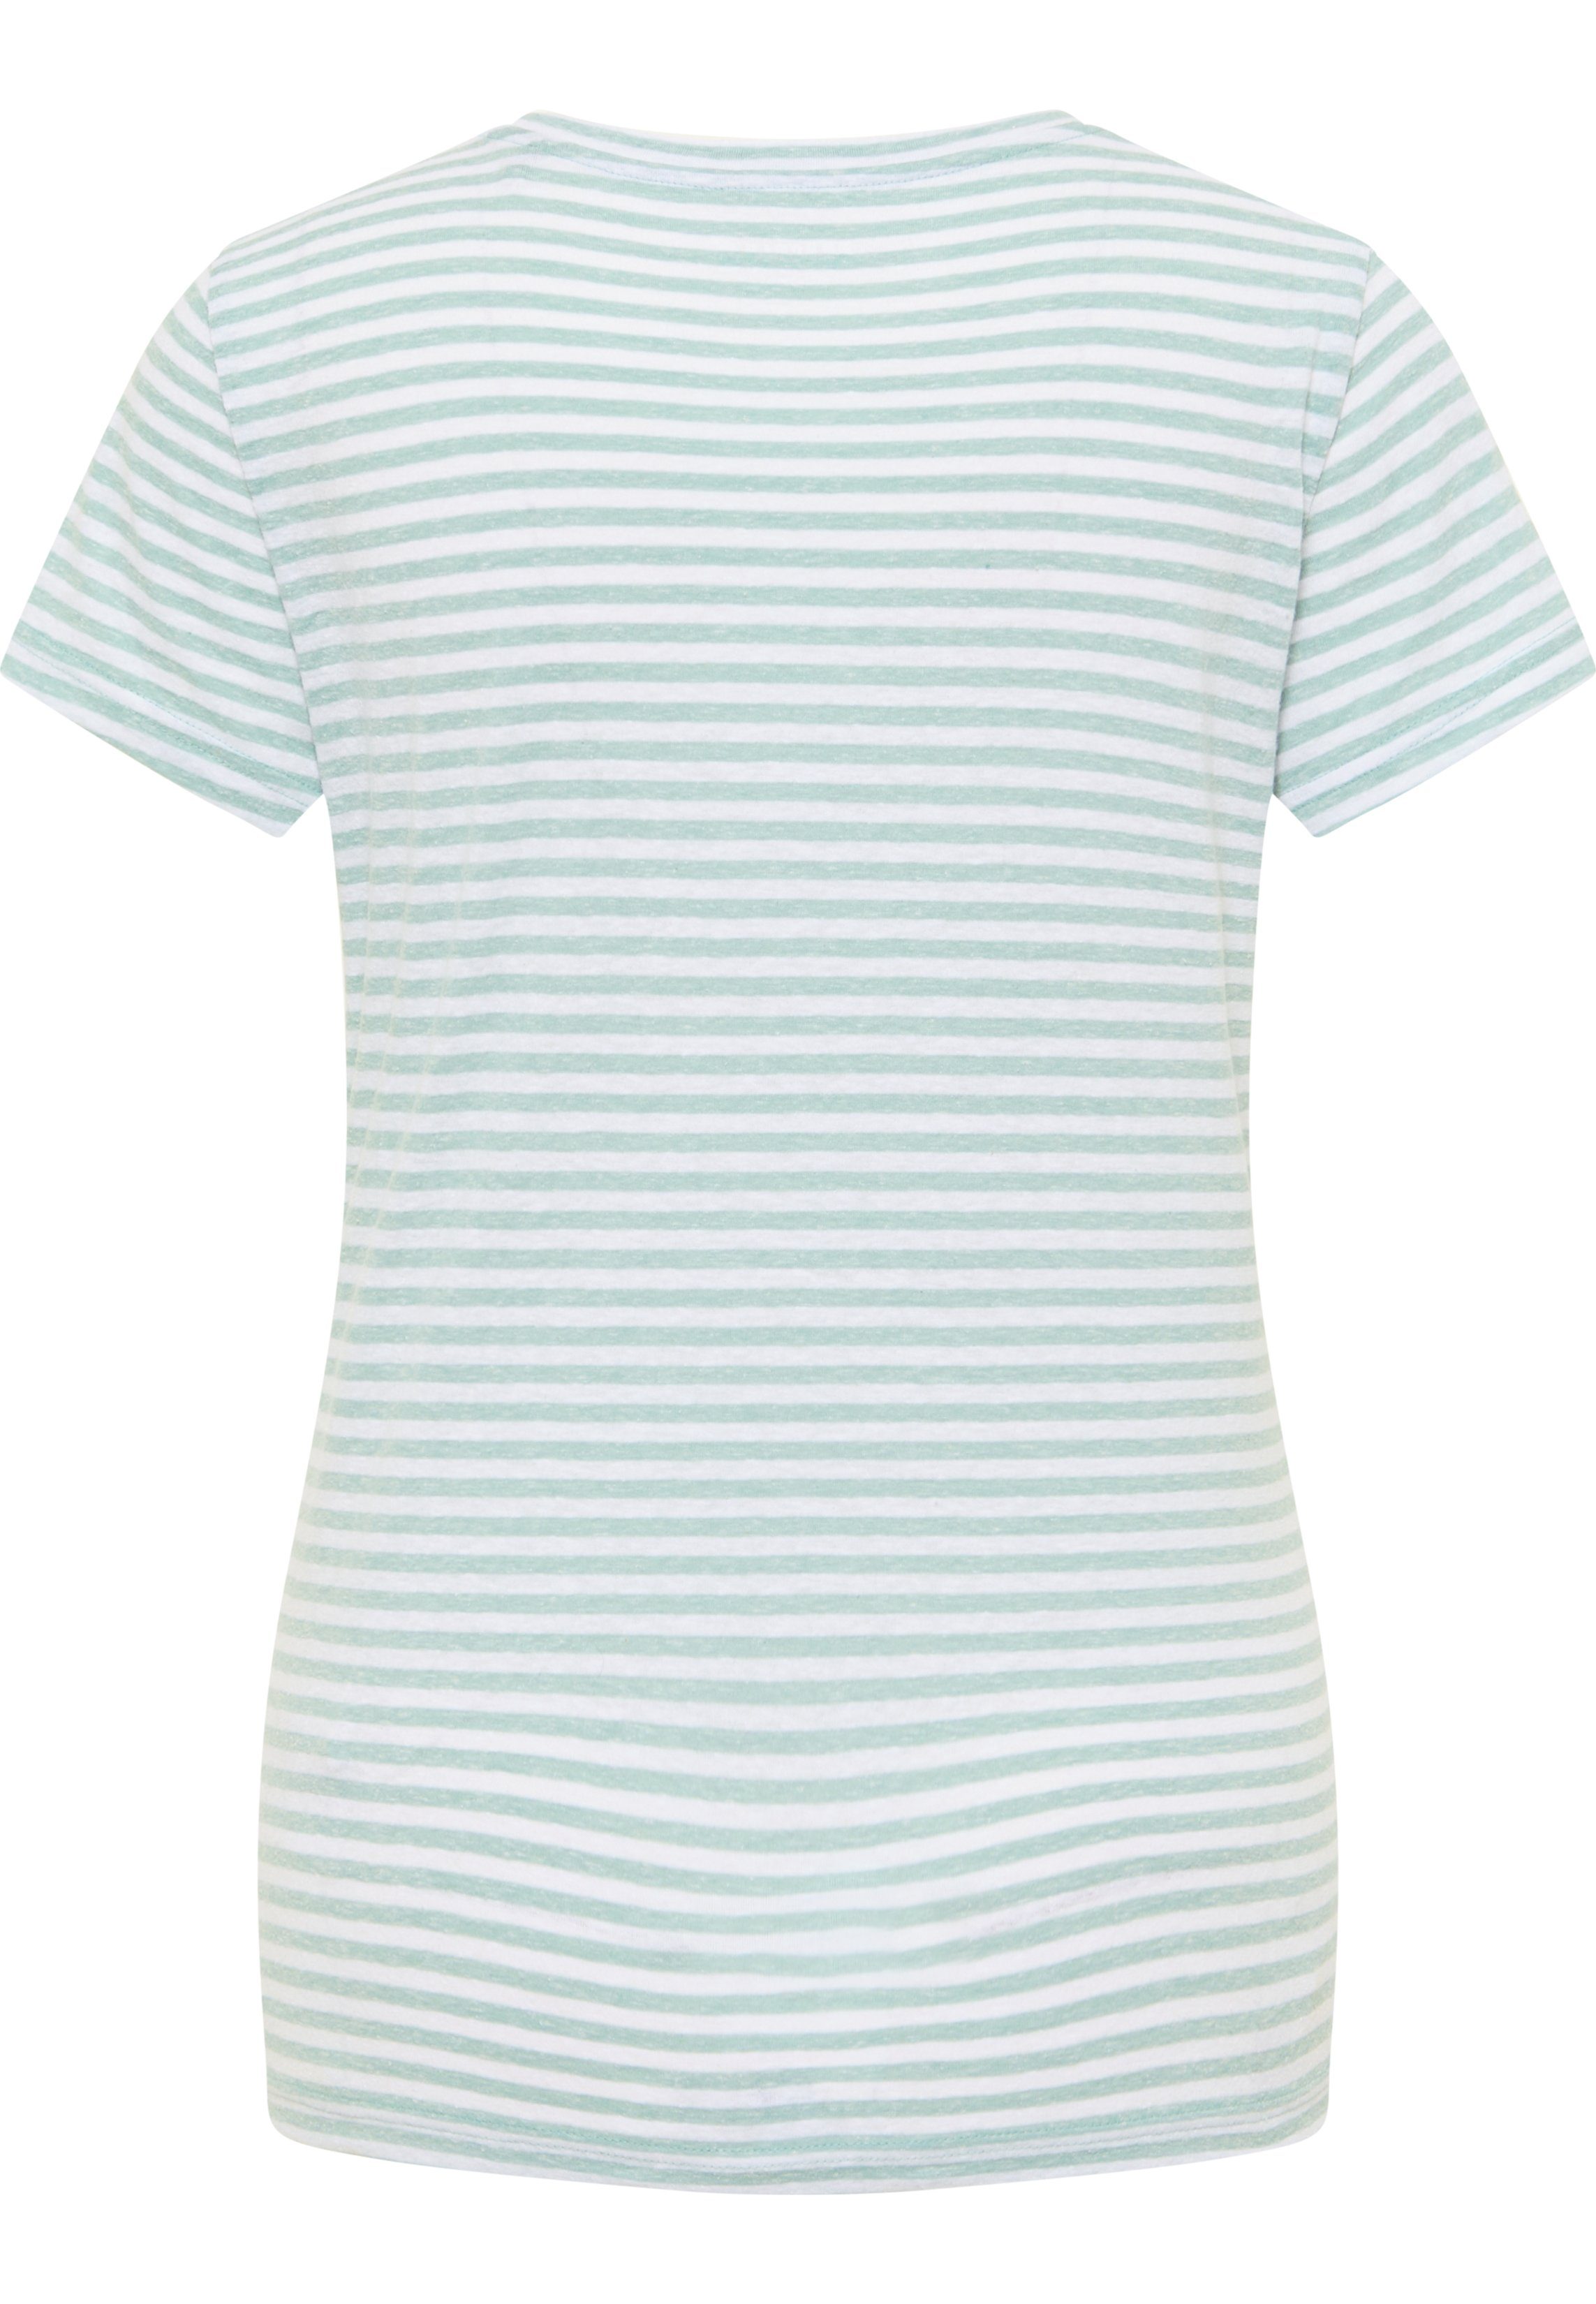 C T-Shirt Stripe Alexia MUSTANG grau-grün